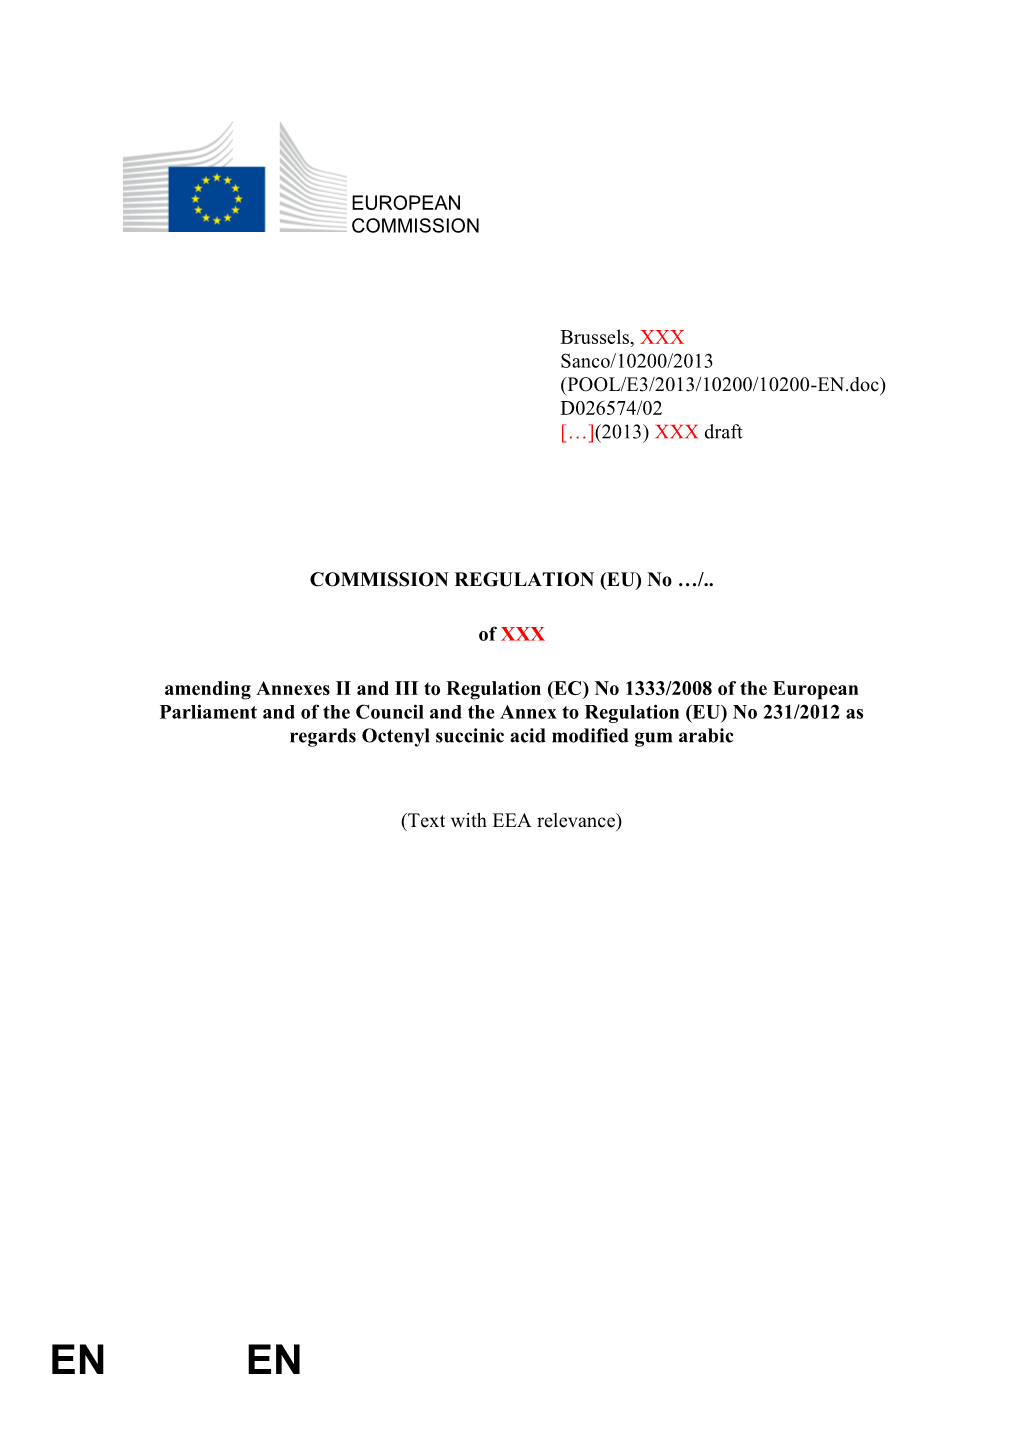 COMMISSION REGULATION (EU) No